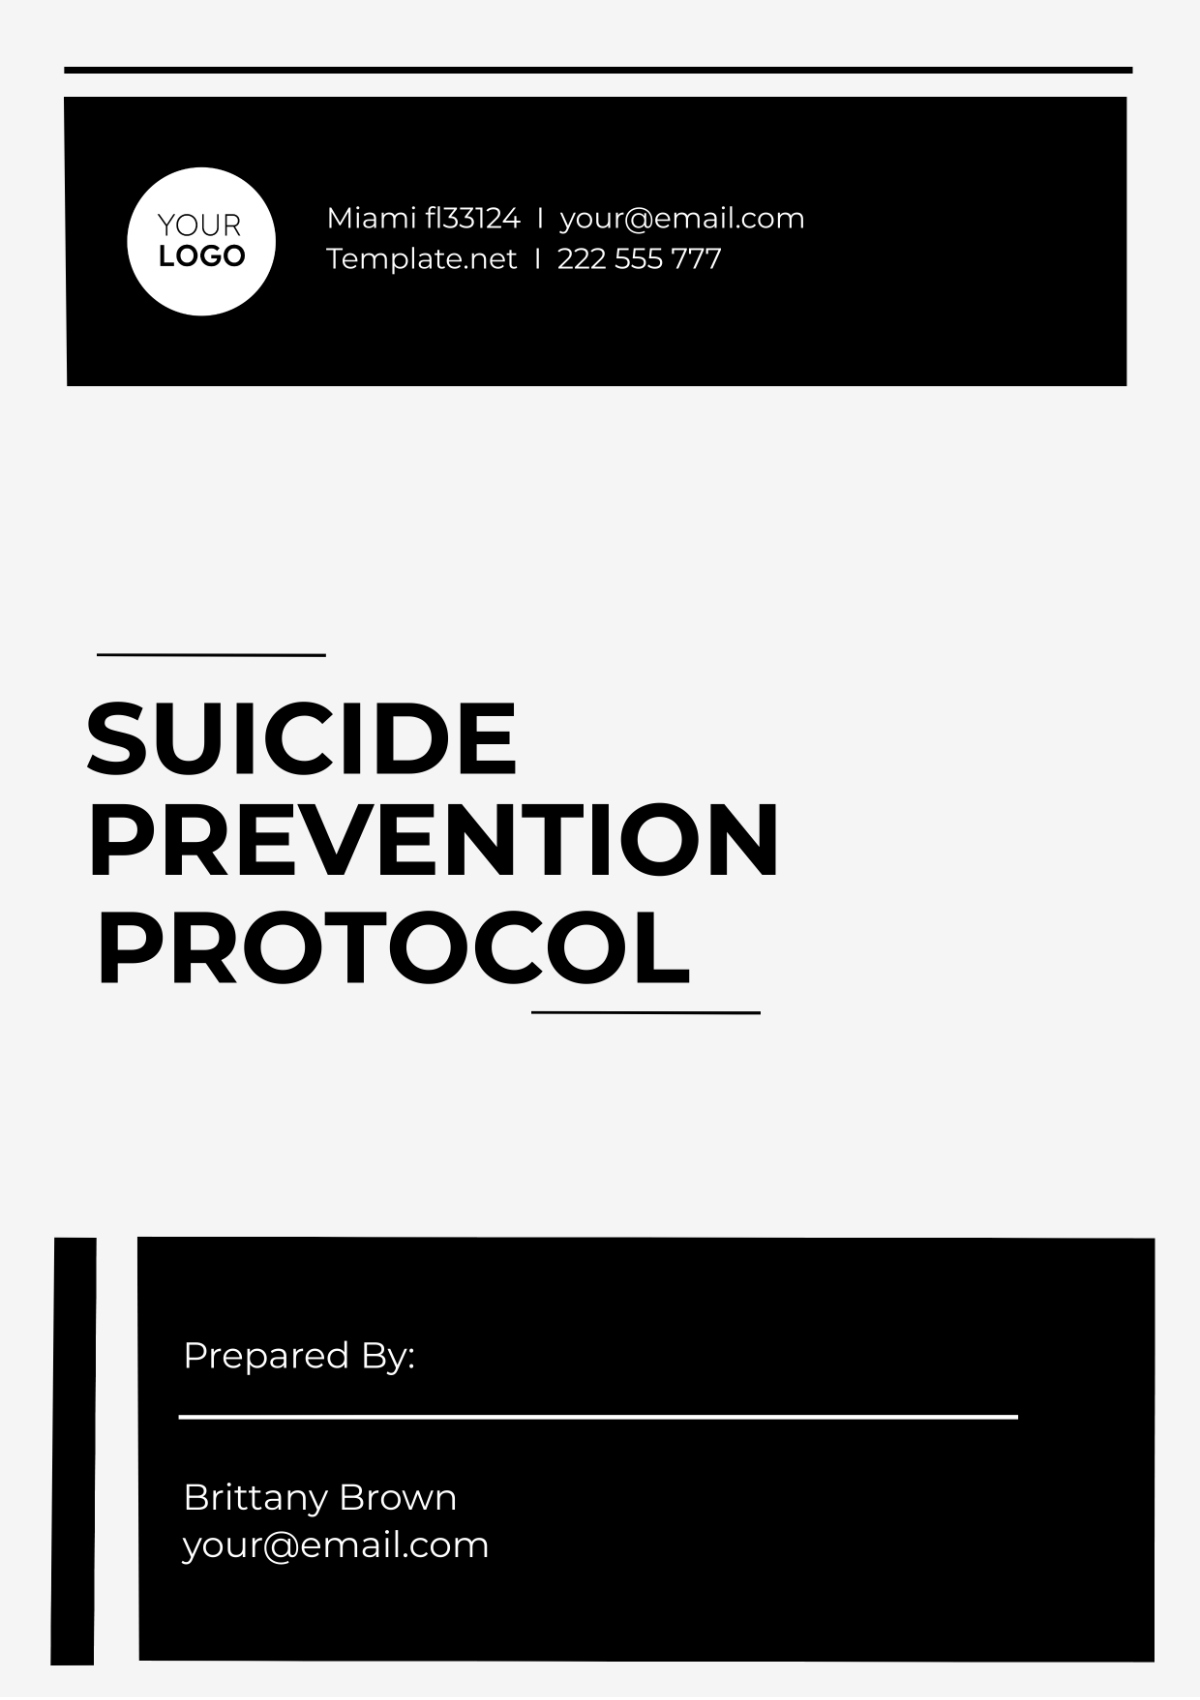 Free Suicide Prevention Protocol Template